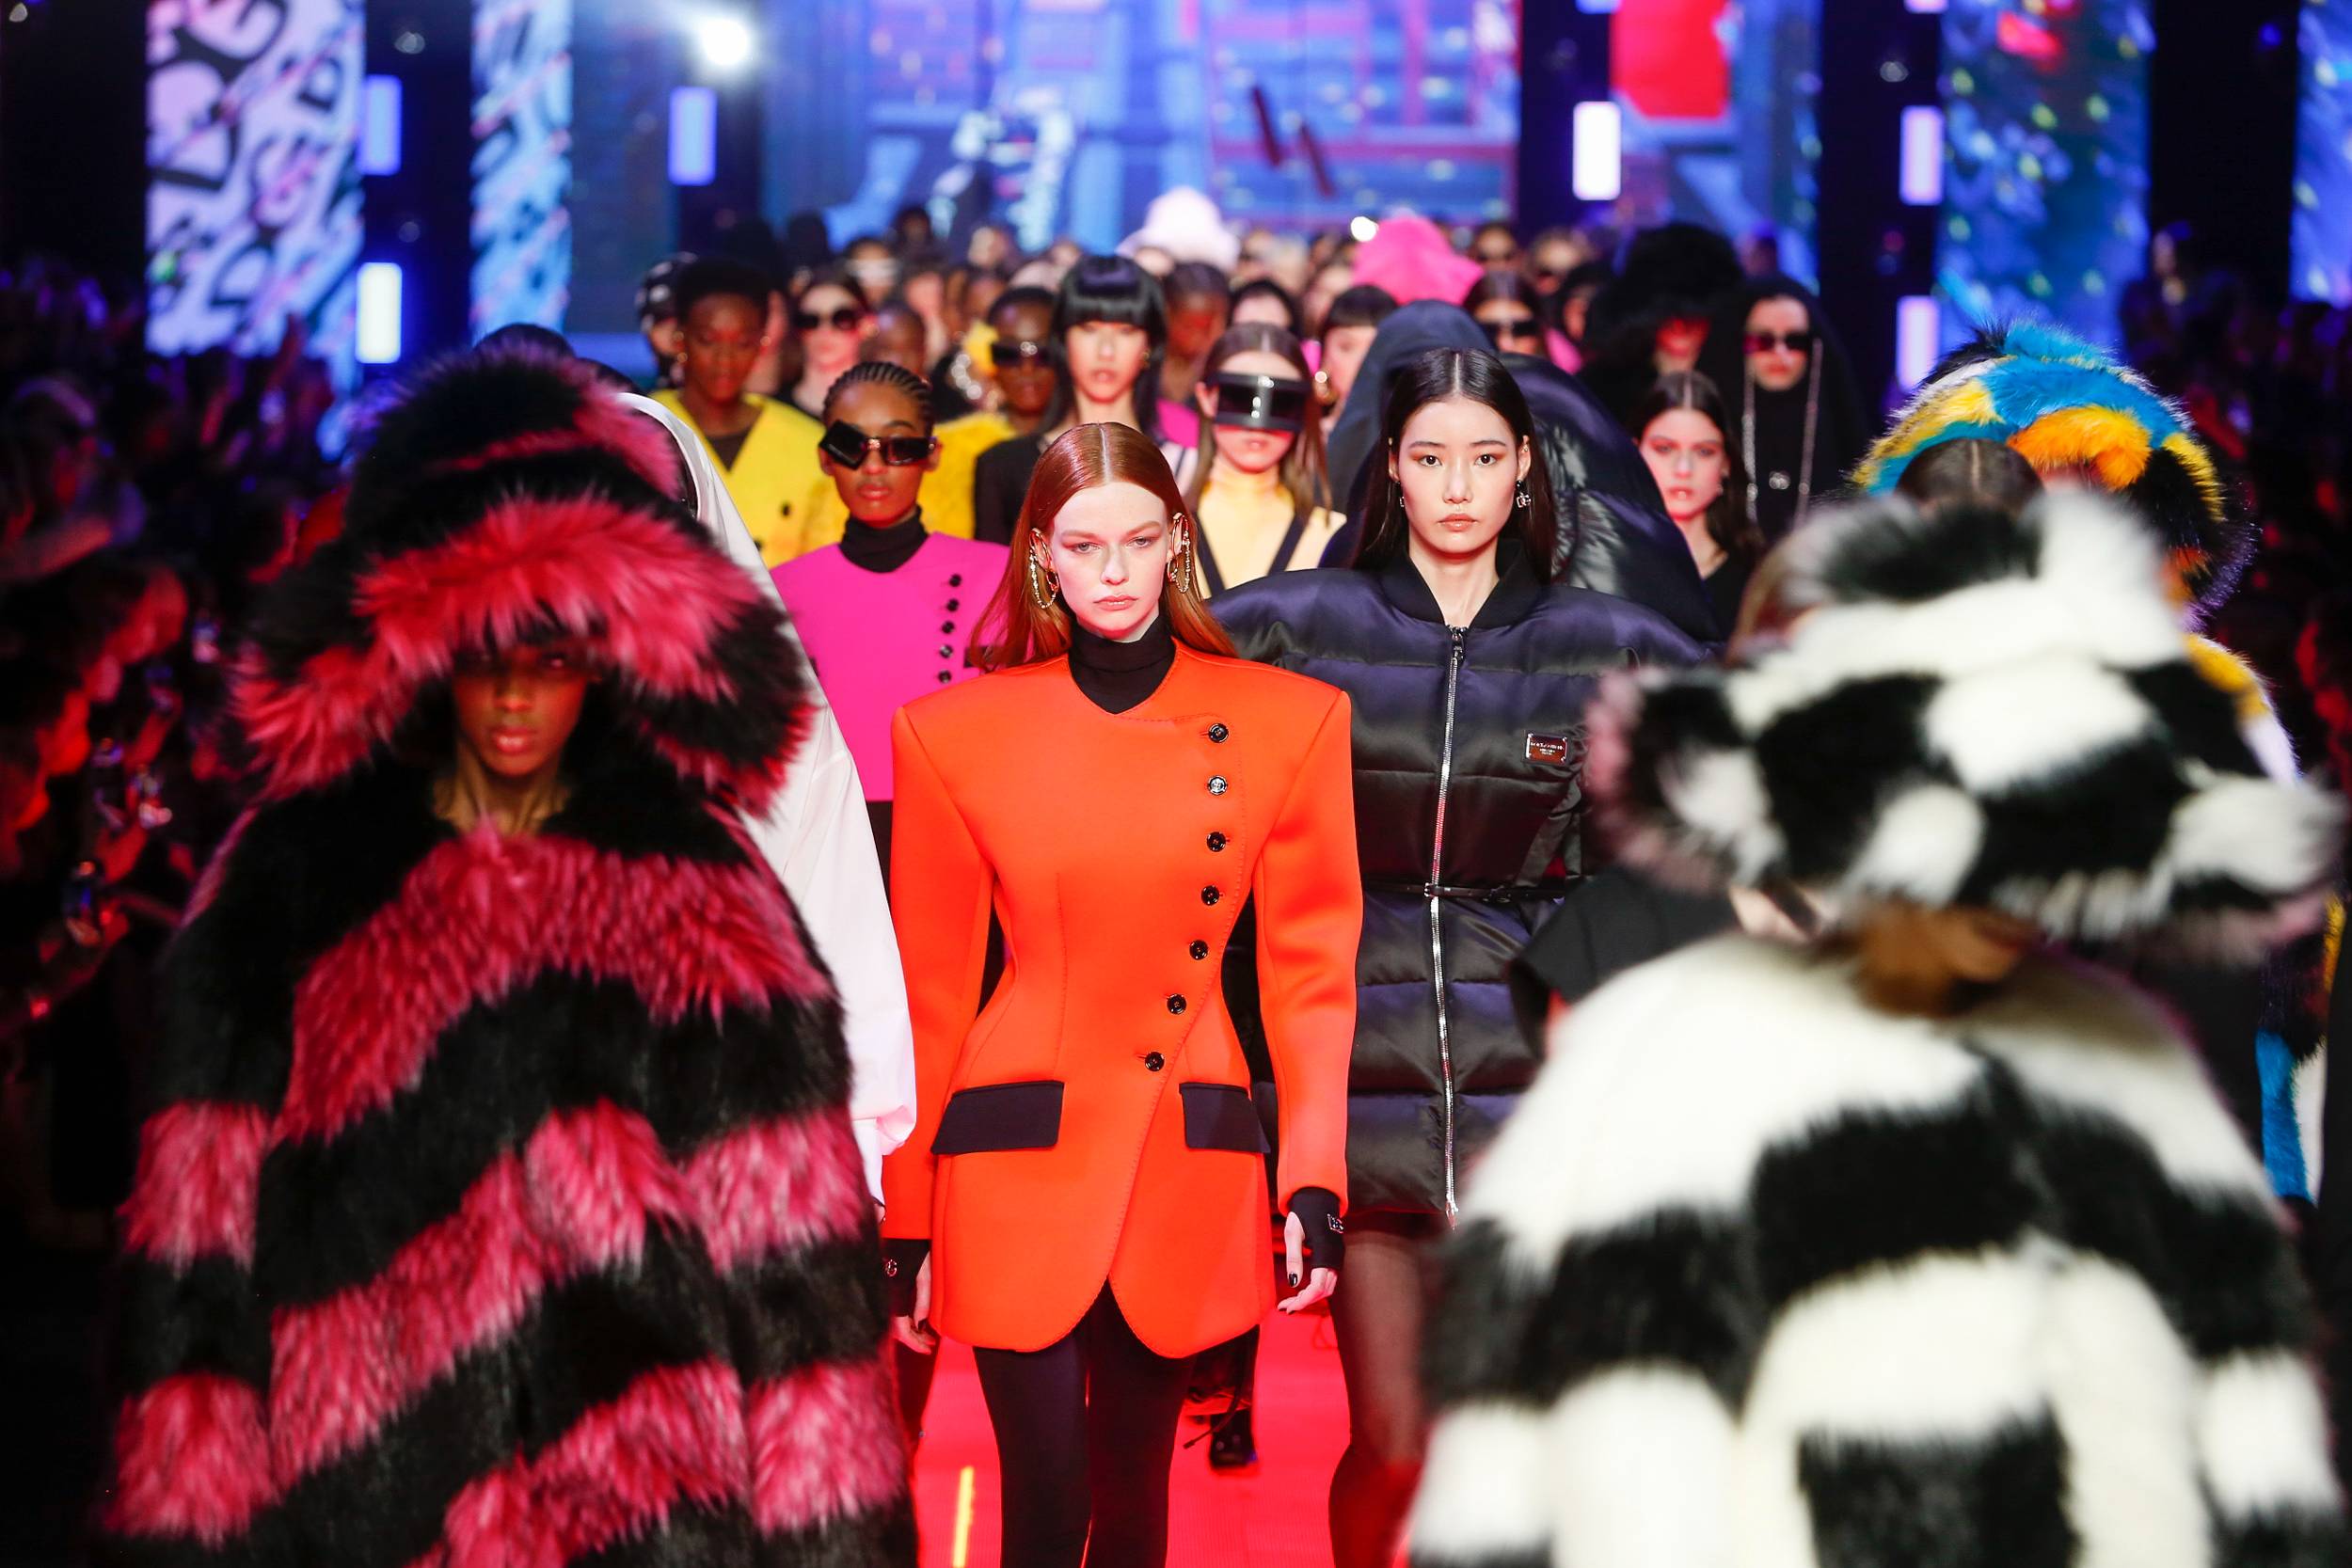 Milan Fashion Week: Gucci Fall/Winter 2022 - A&E Magazine